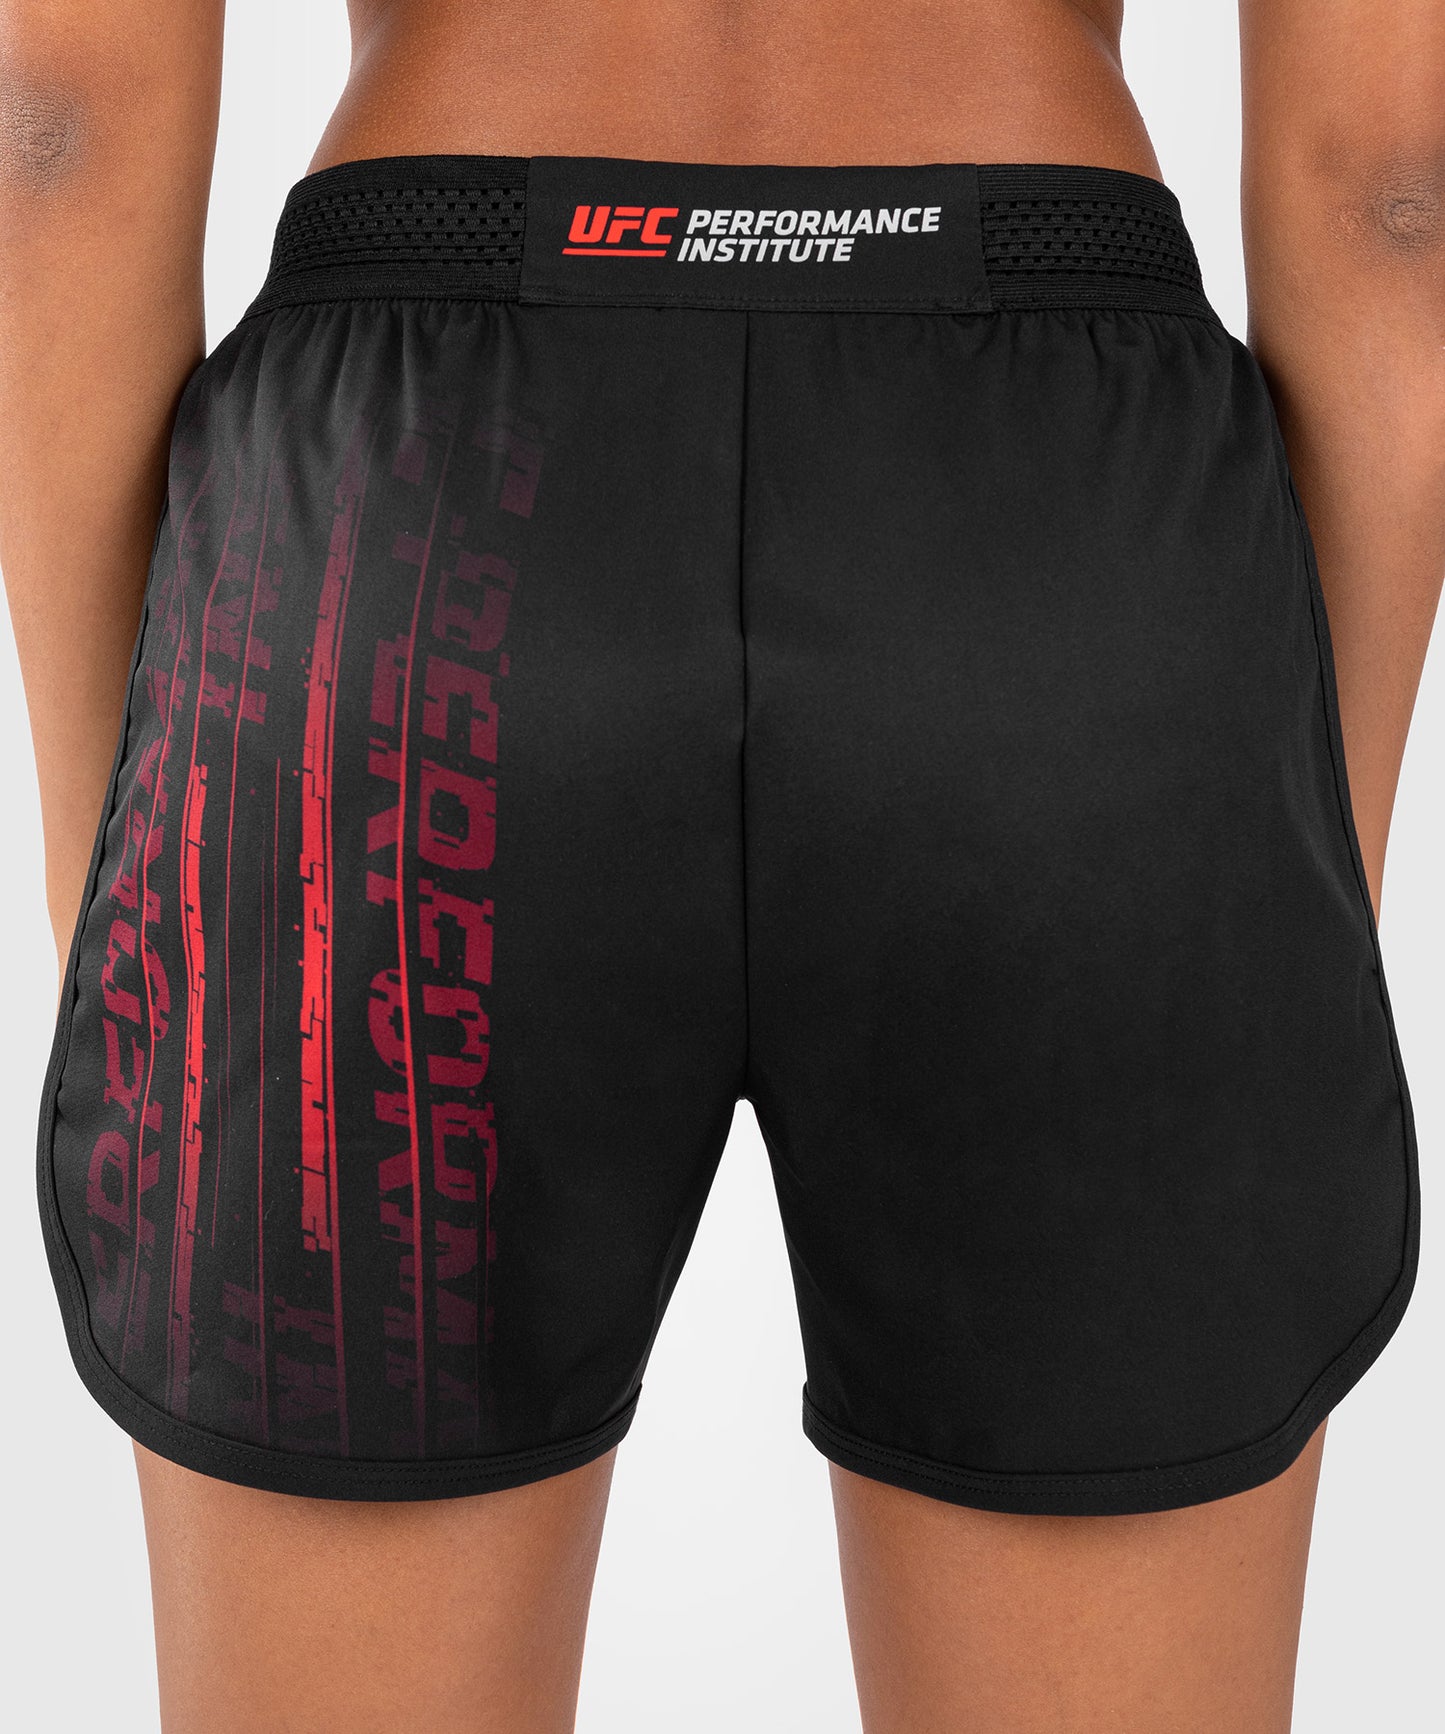 UFC Venum Performance Institute 2.0 Pantaloncini da Donna - Nero/Rosso